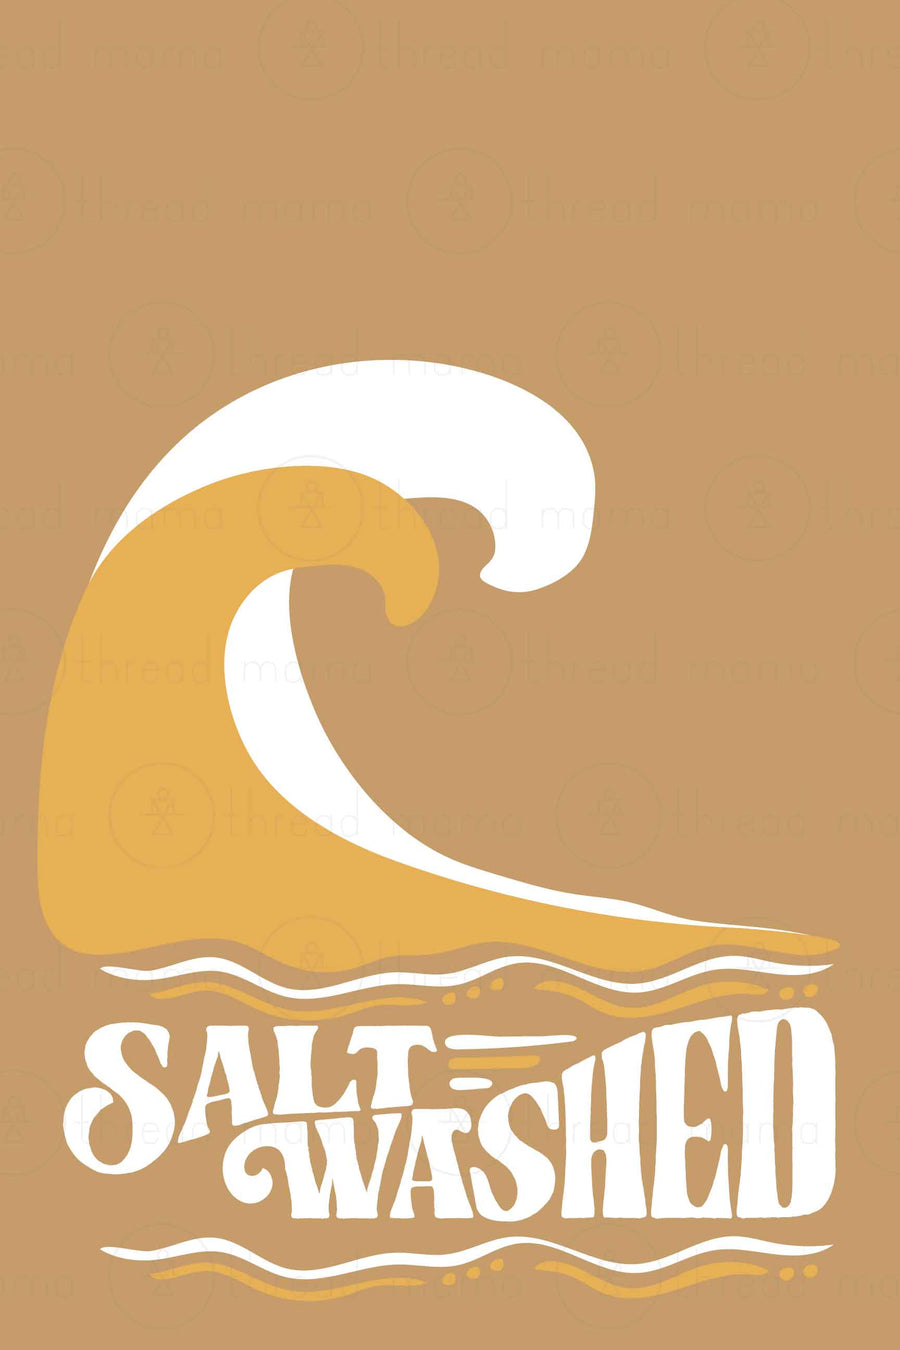 Salt Washed Collection (Printable Poster)